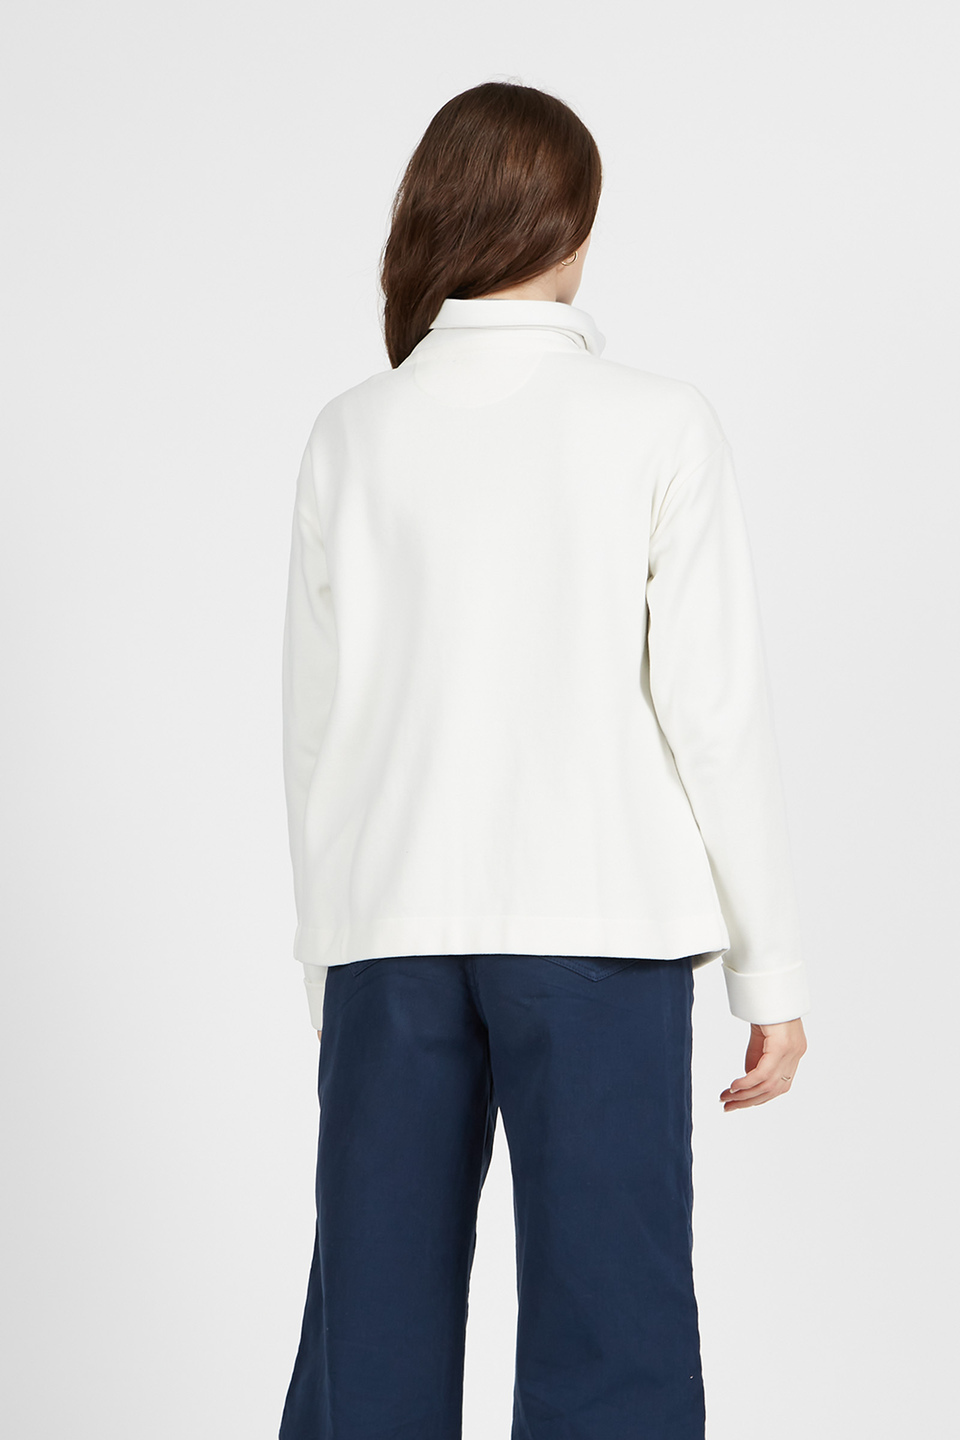 Women’s cotton high neck sweatshirt with regular fit zip front closure | La Martina - Official Online Shop